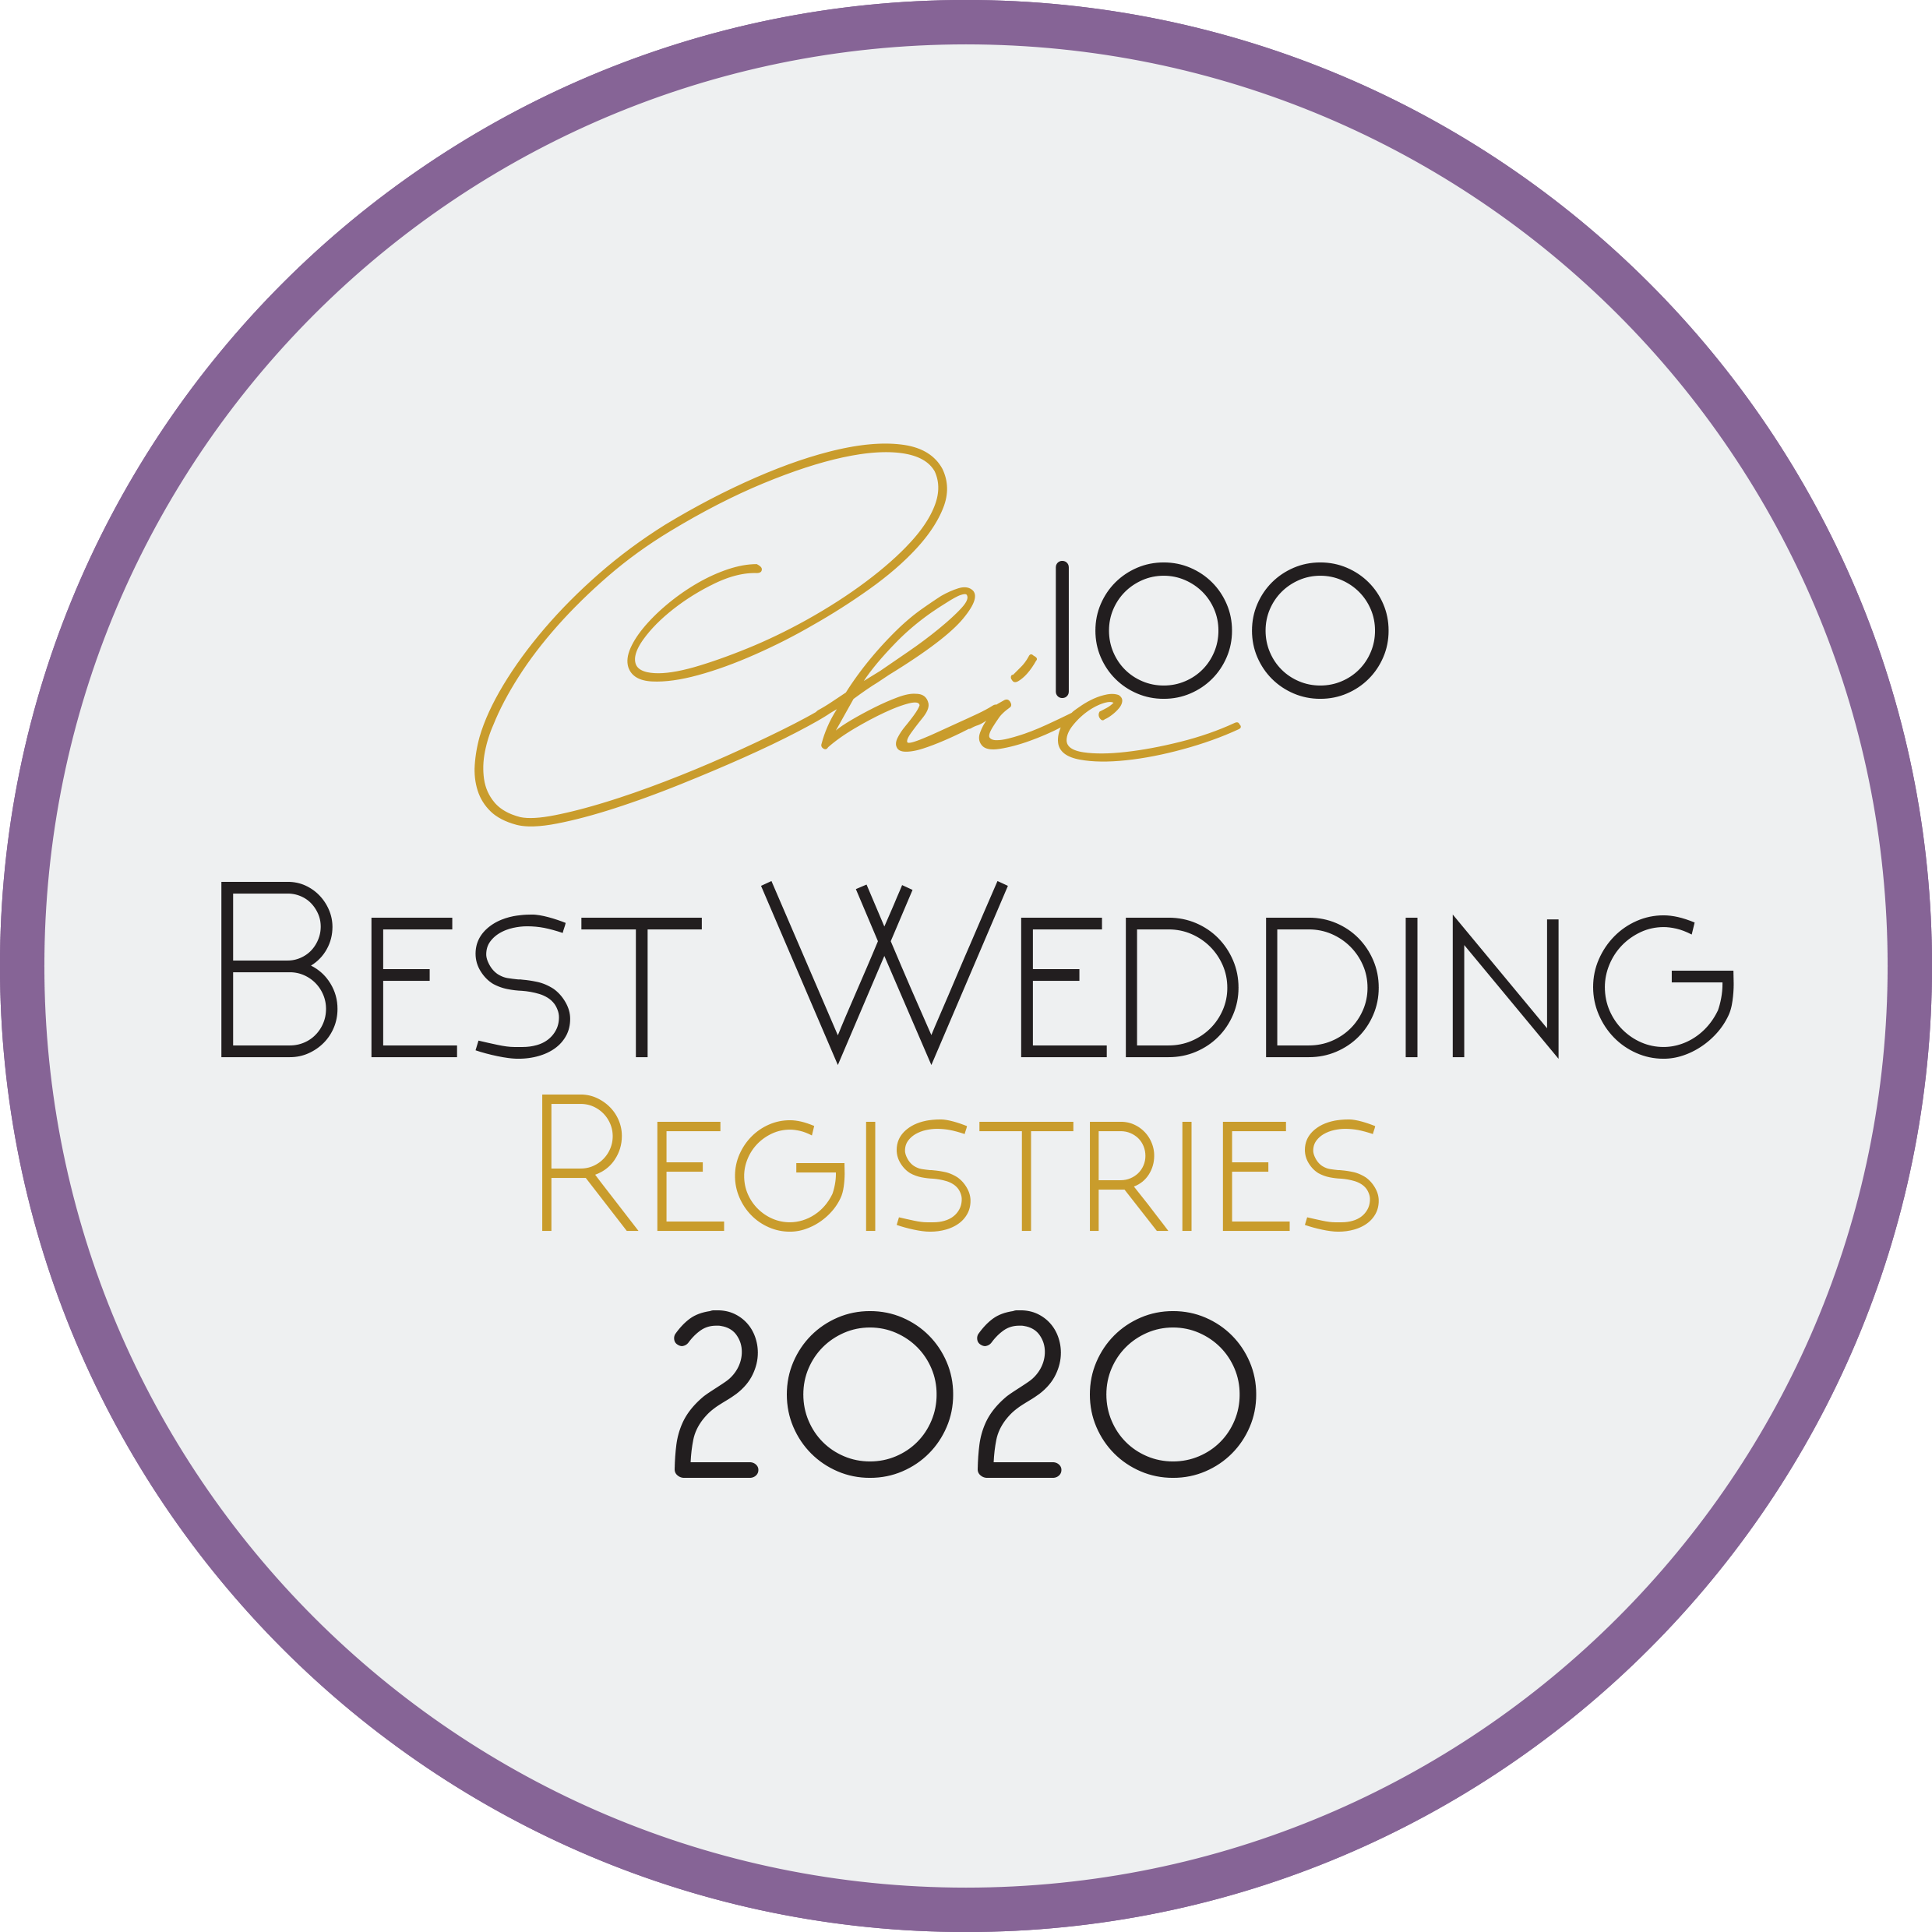 Kitchenware dominates top wedding registry items of 2017 – Georgia